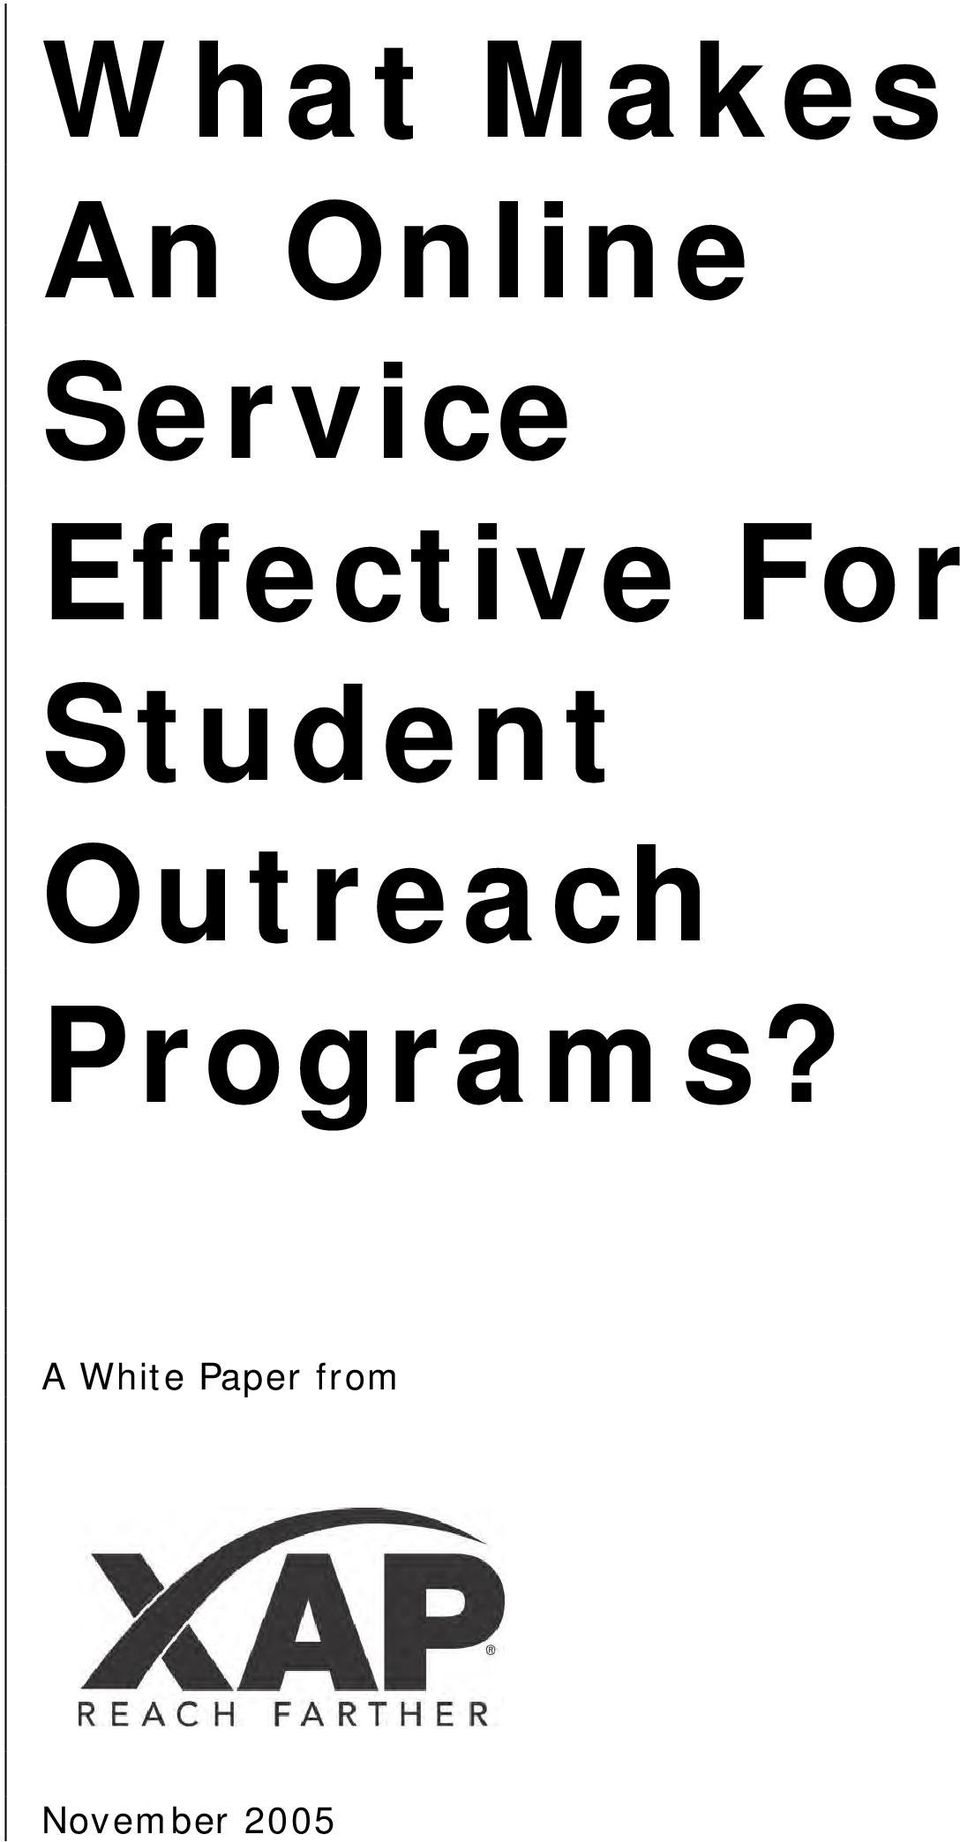 Student Outreach Programs?